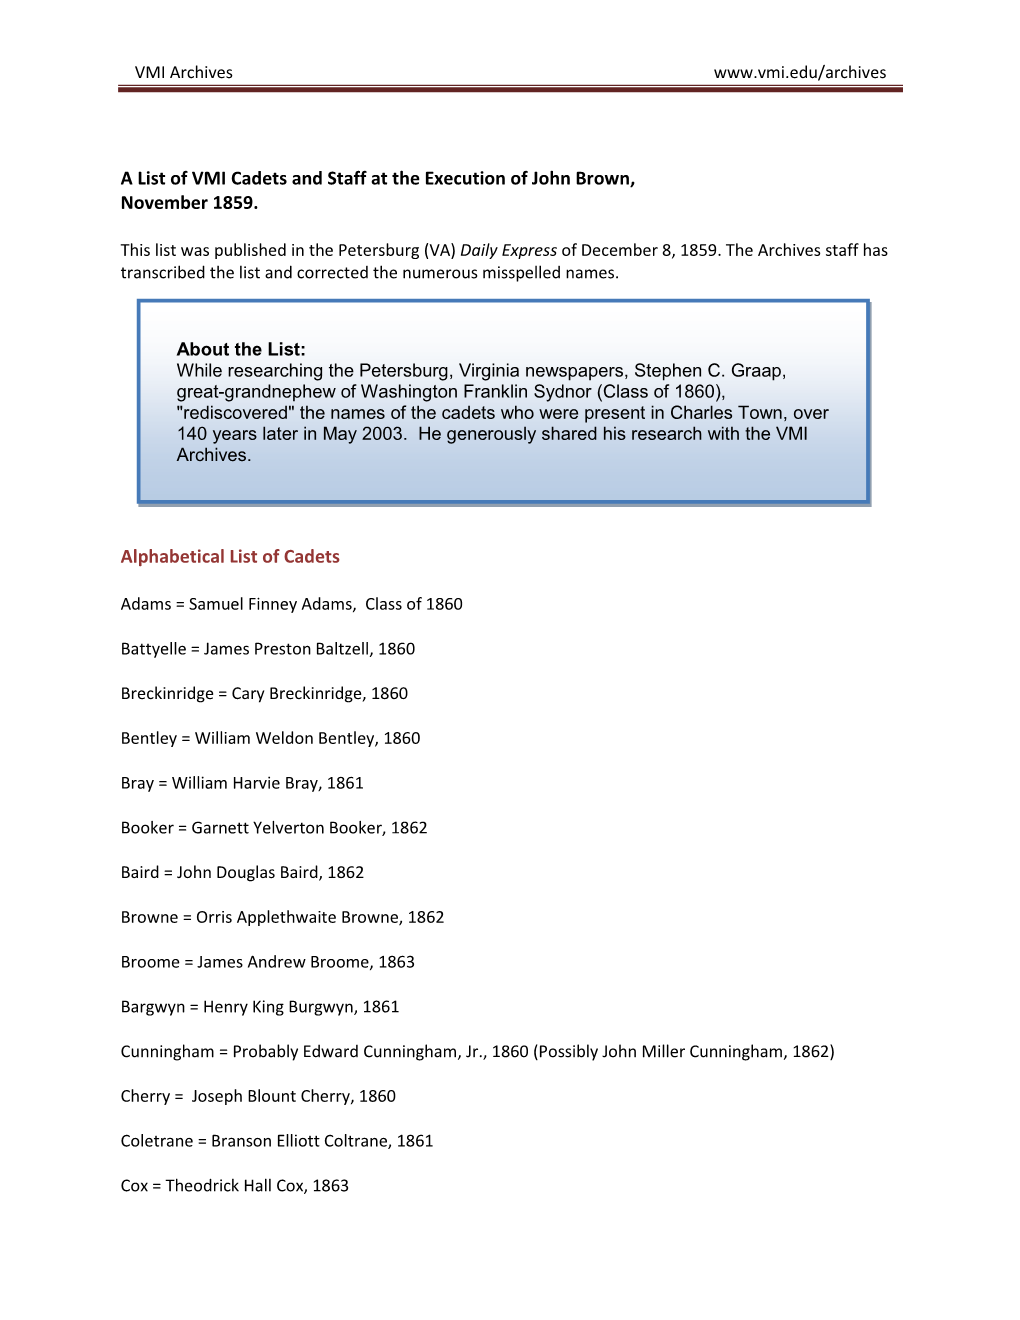 List of Cadet Guard at Execution of John Brown